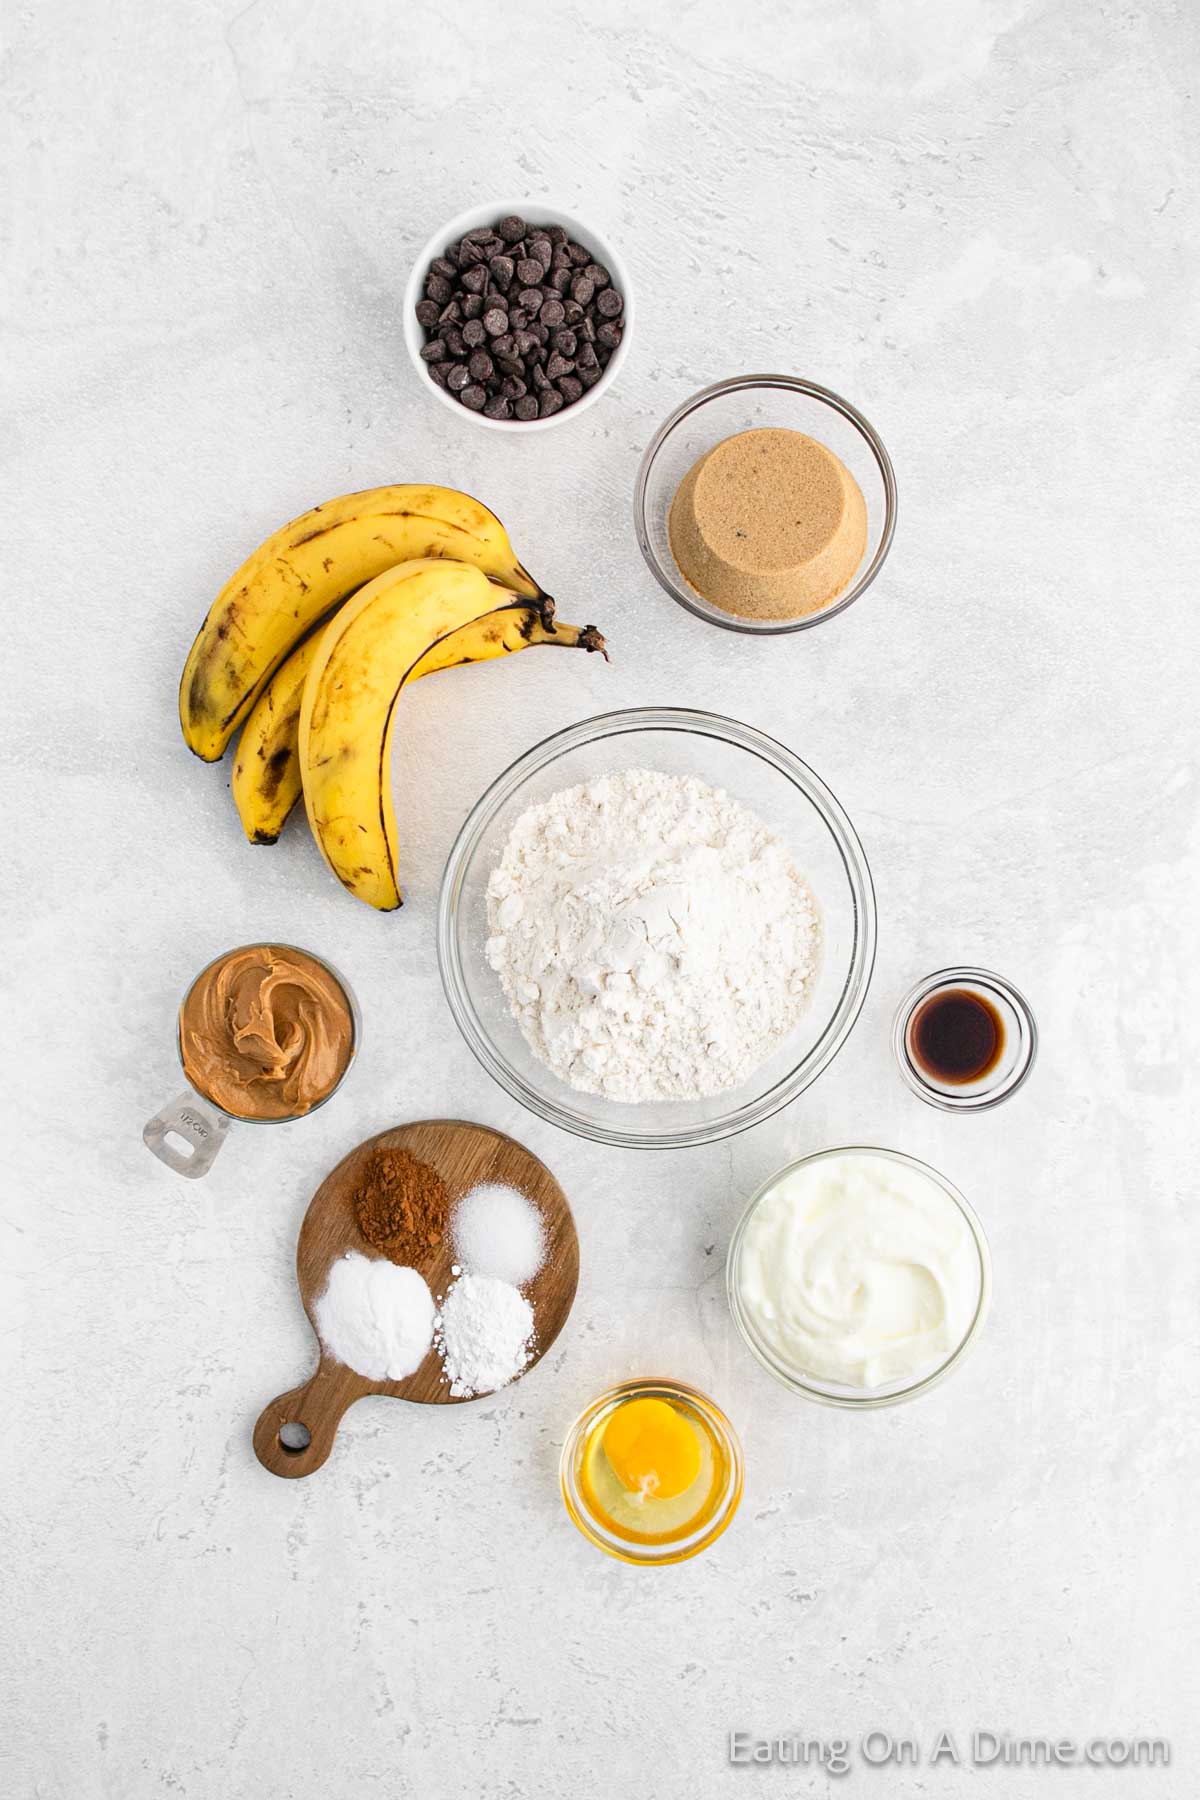 Peanut Butter Banana Muffin Ingredients - Flour, baking powder, baking soda, cinnamon, salt, brown sugar, egg, bananas, peanut butter, yogurt, vanilla, chocolate chips